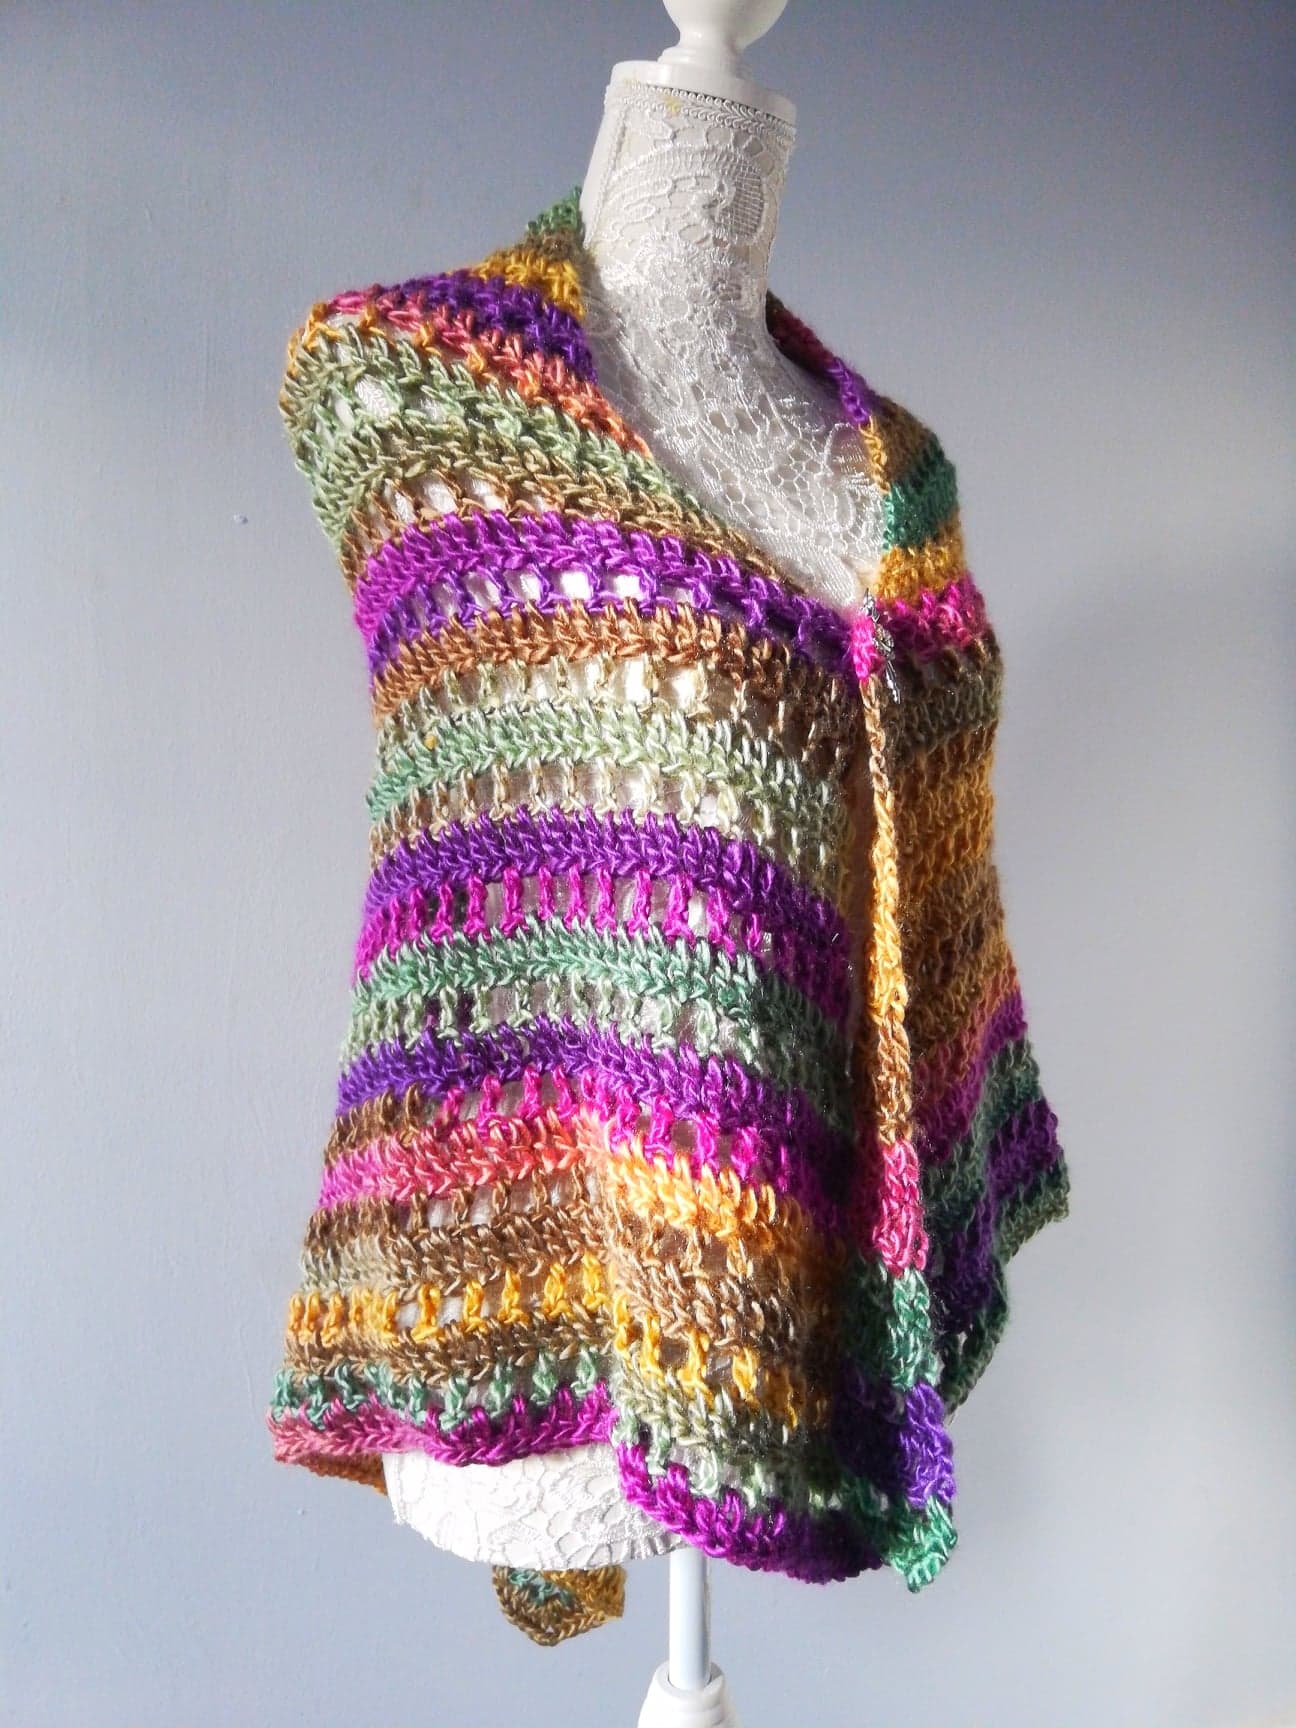 Crochet The Beautiful Maiden Wrap by Selina Veronique Crochet